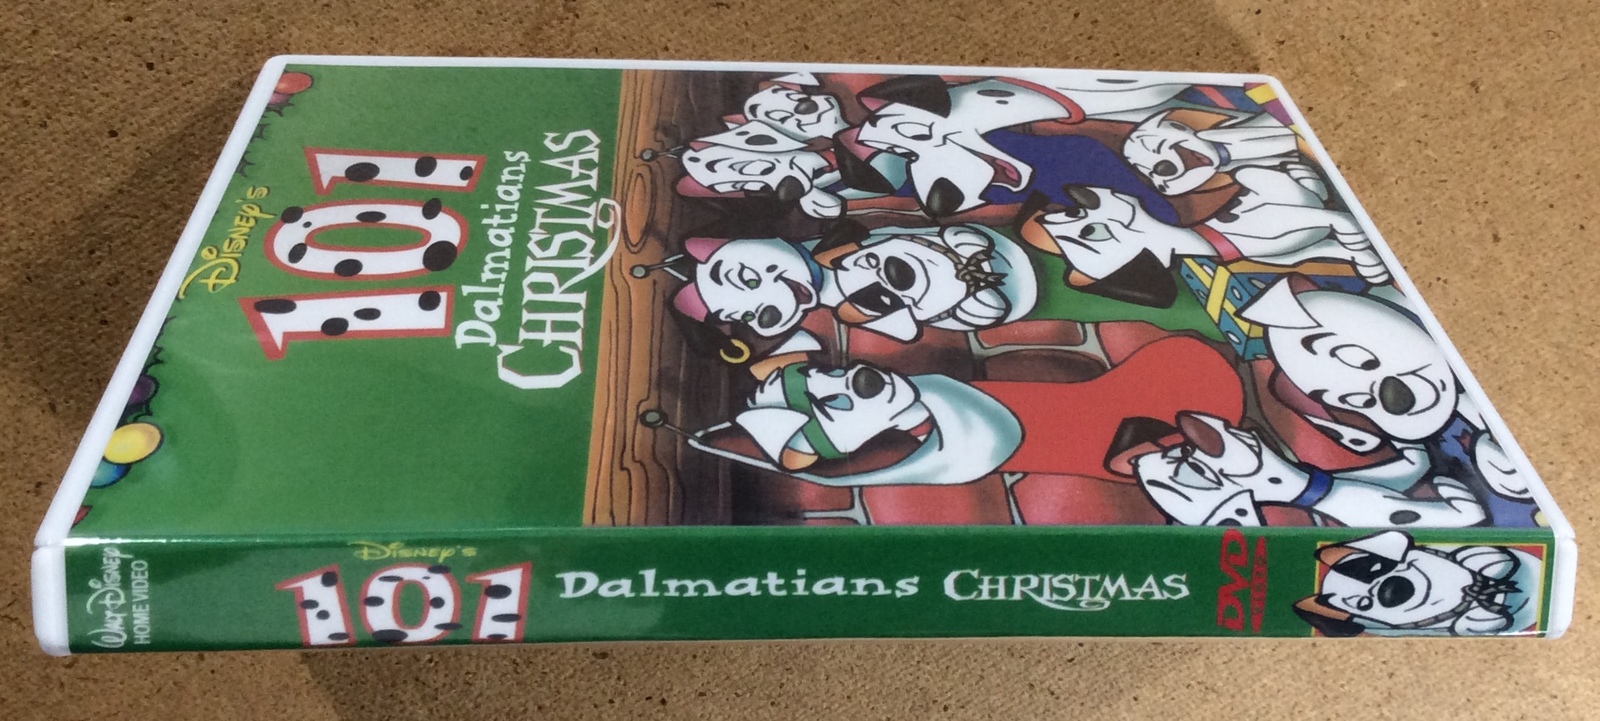 Disney’s 101 Dalmatians Christmas DVD ~ 1997 (Home Video Release) - DVD, HD DVD & Blu-ray